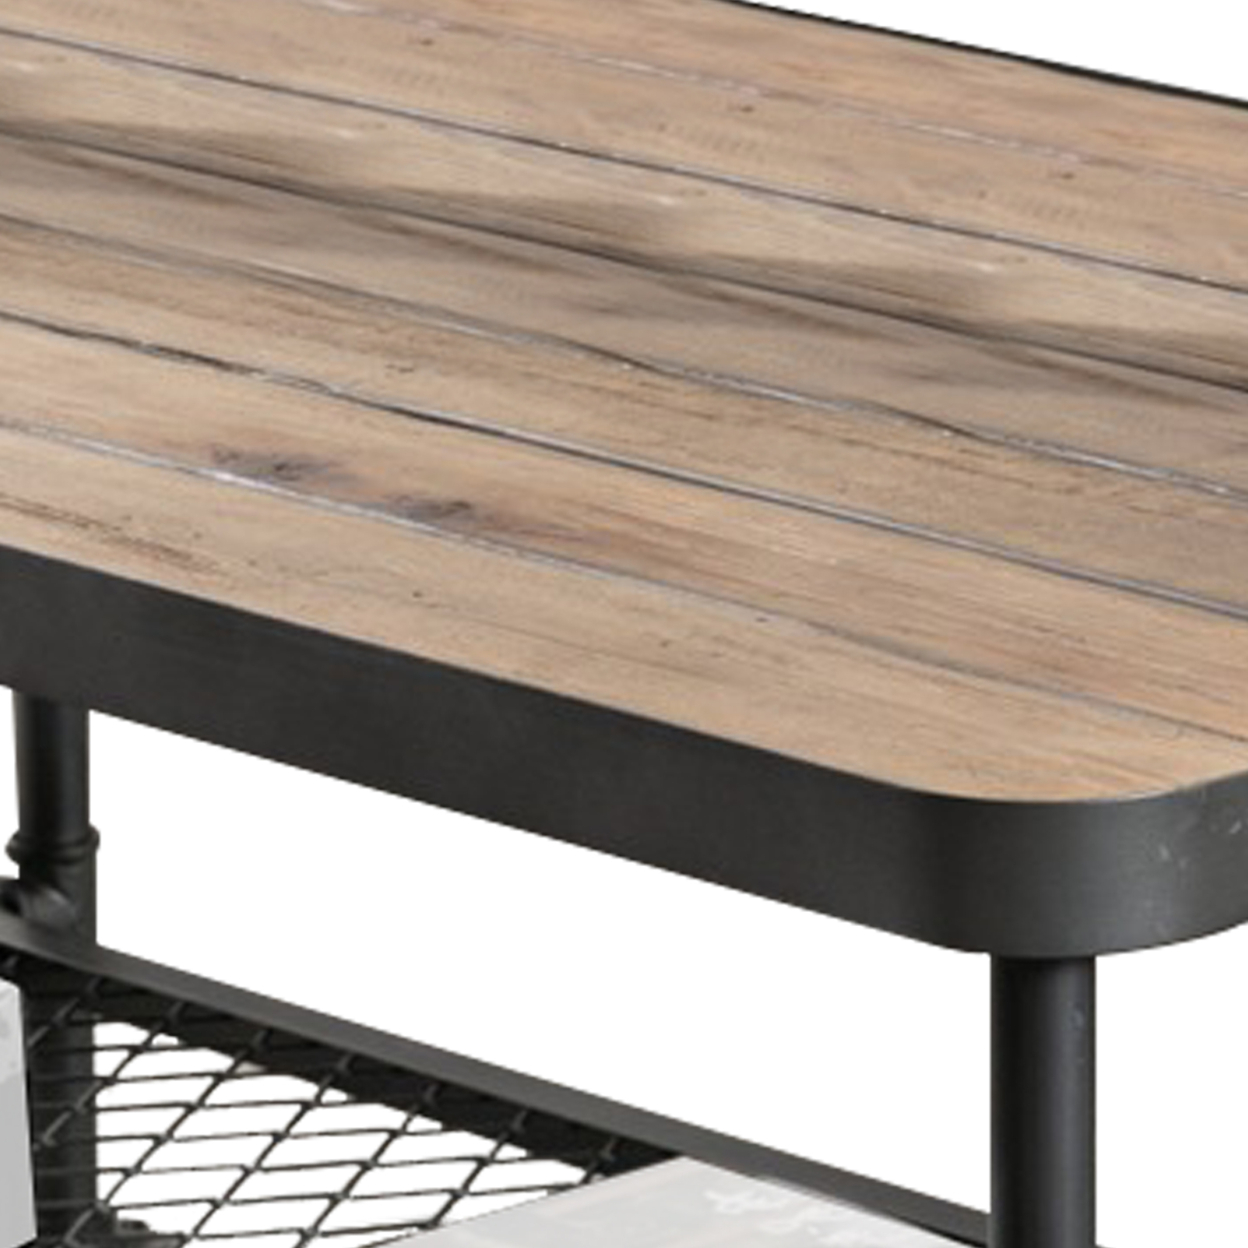 Coffee Table With Plank Top And Mesh Shelf, Brown And Gray- Saltoro Sherpi